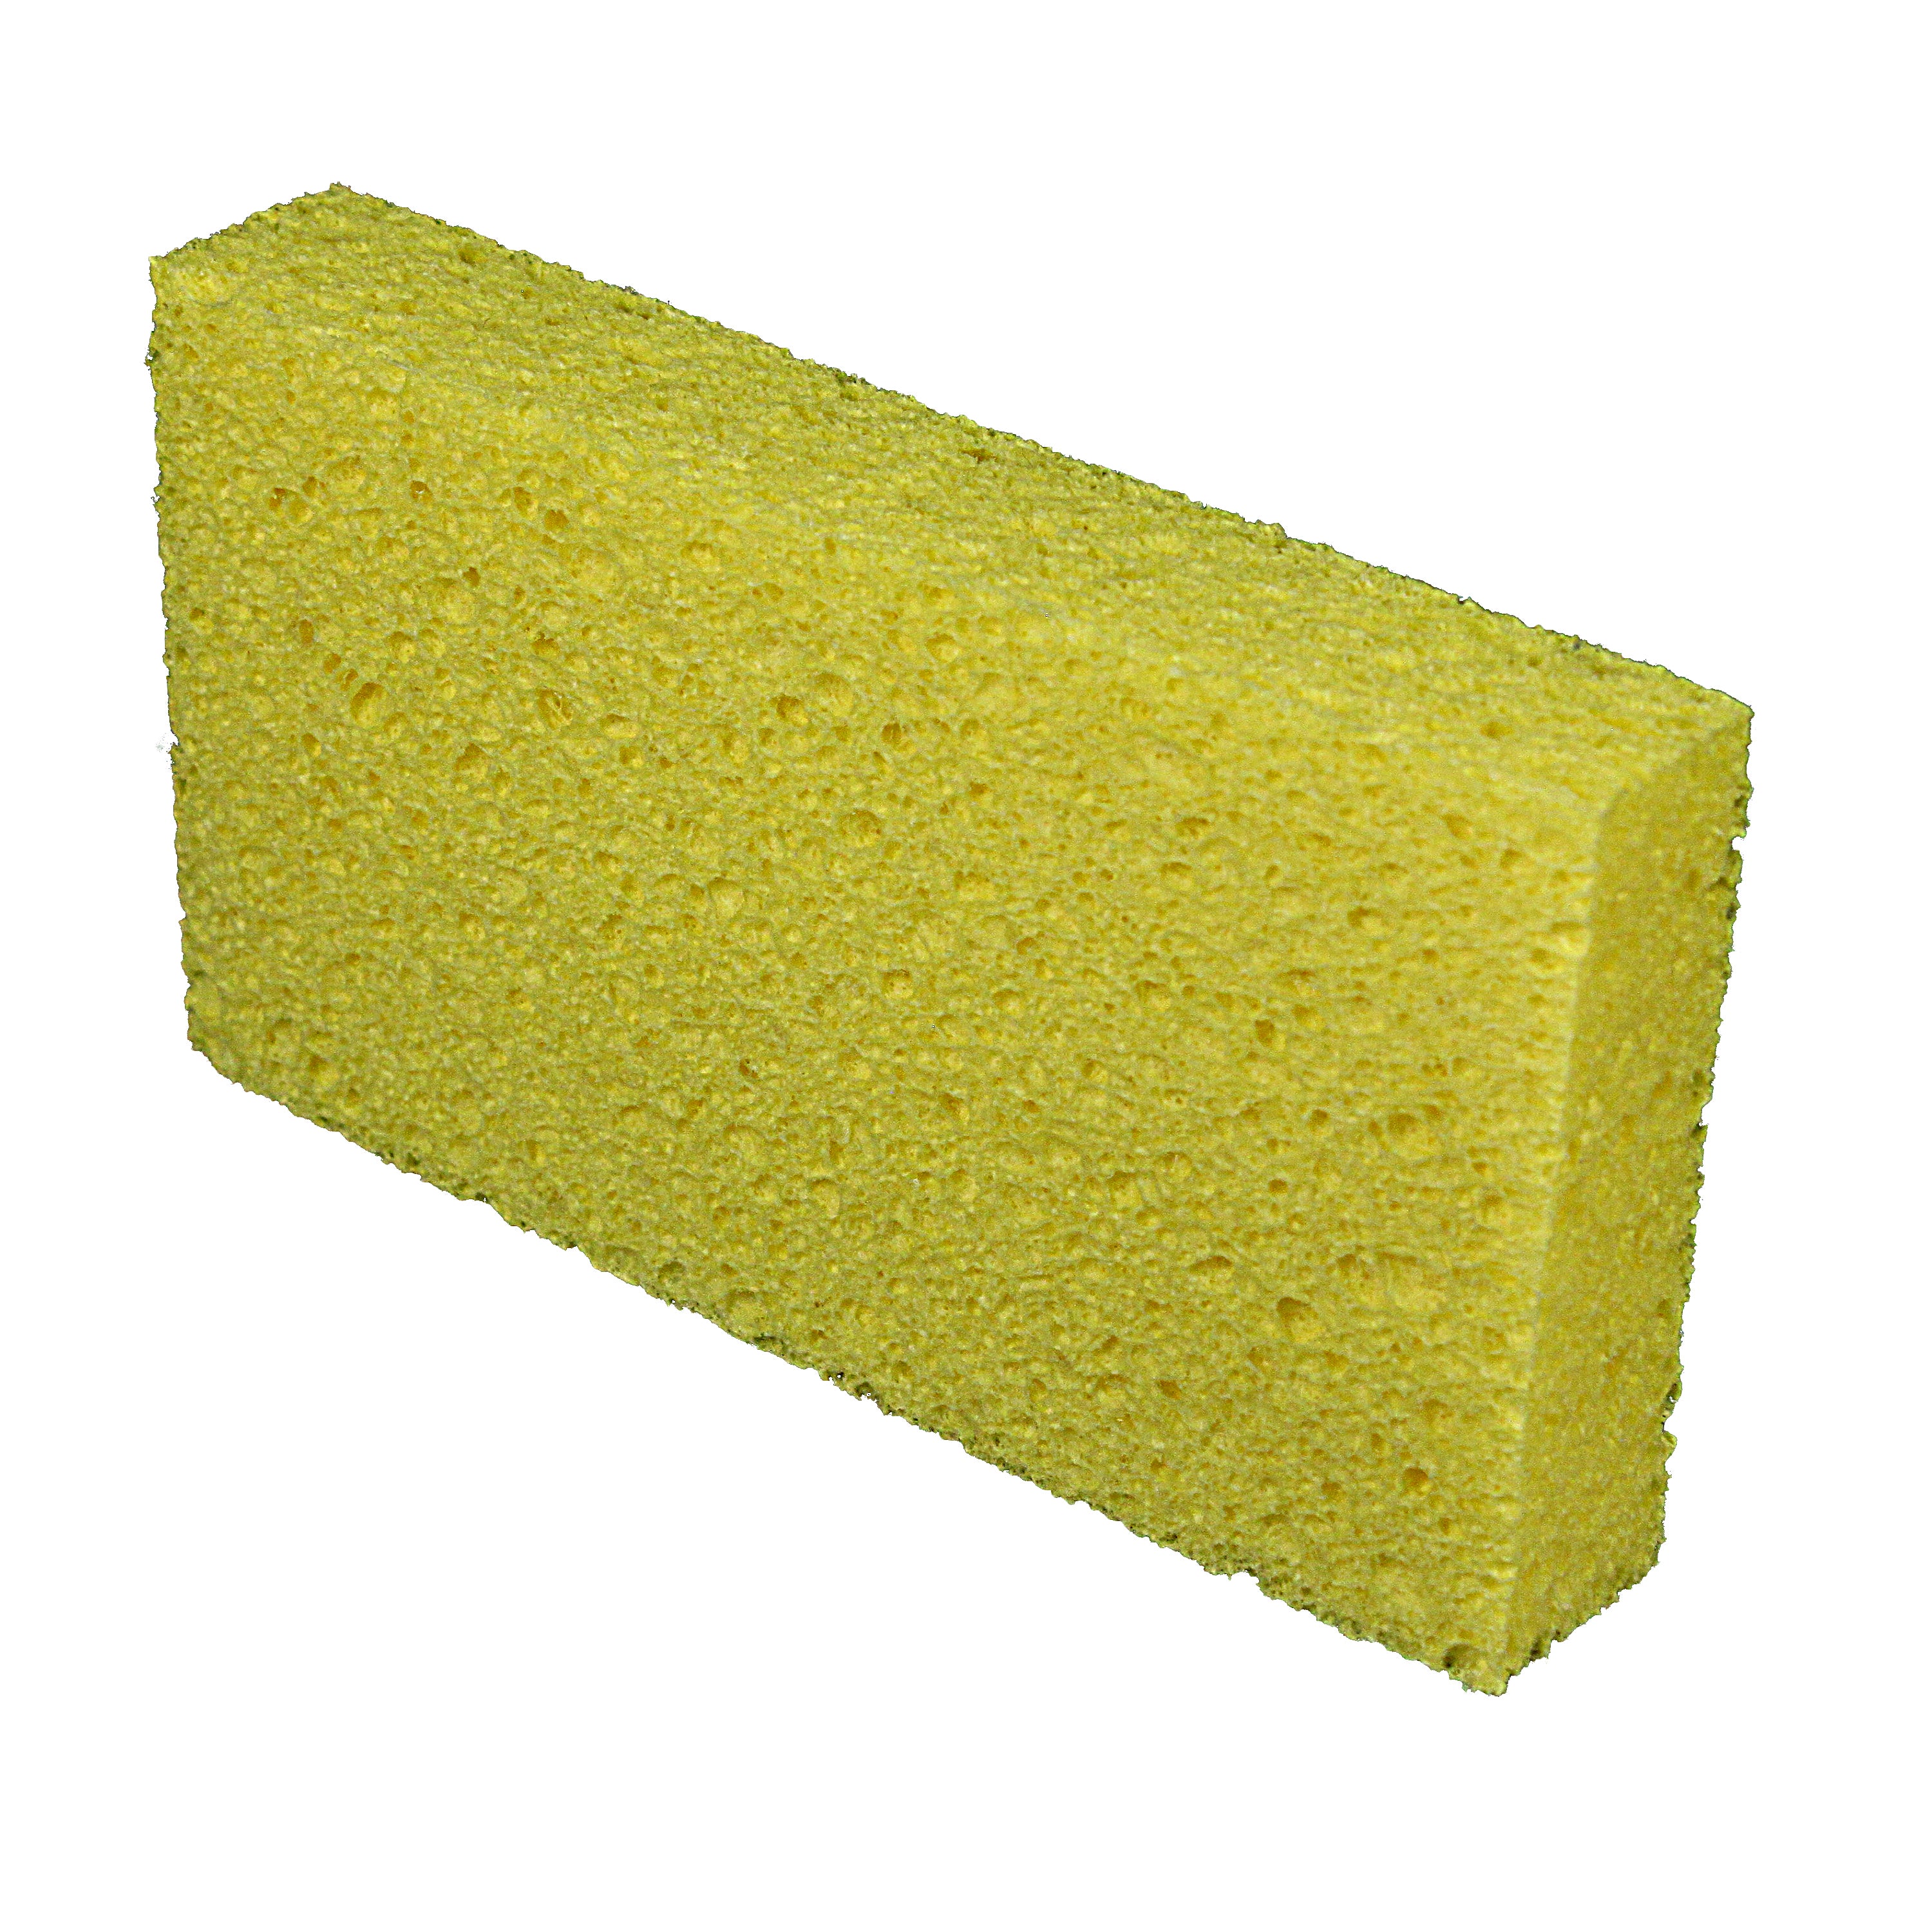 Cellulose Round Sponges - Yellow - 3 Diameter 50 Count (309418)